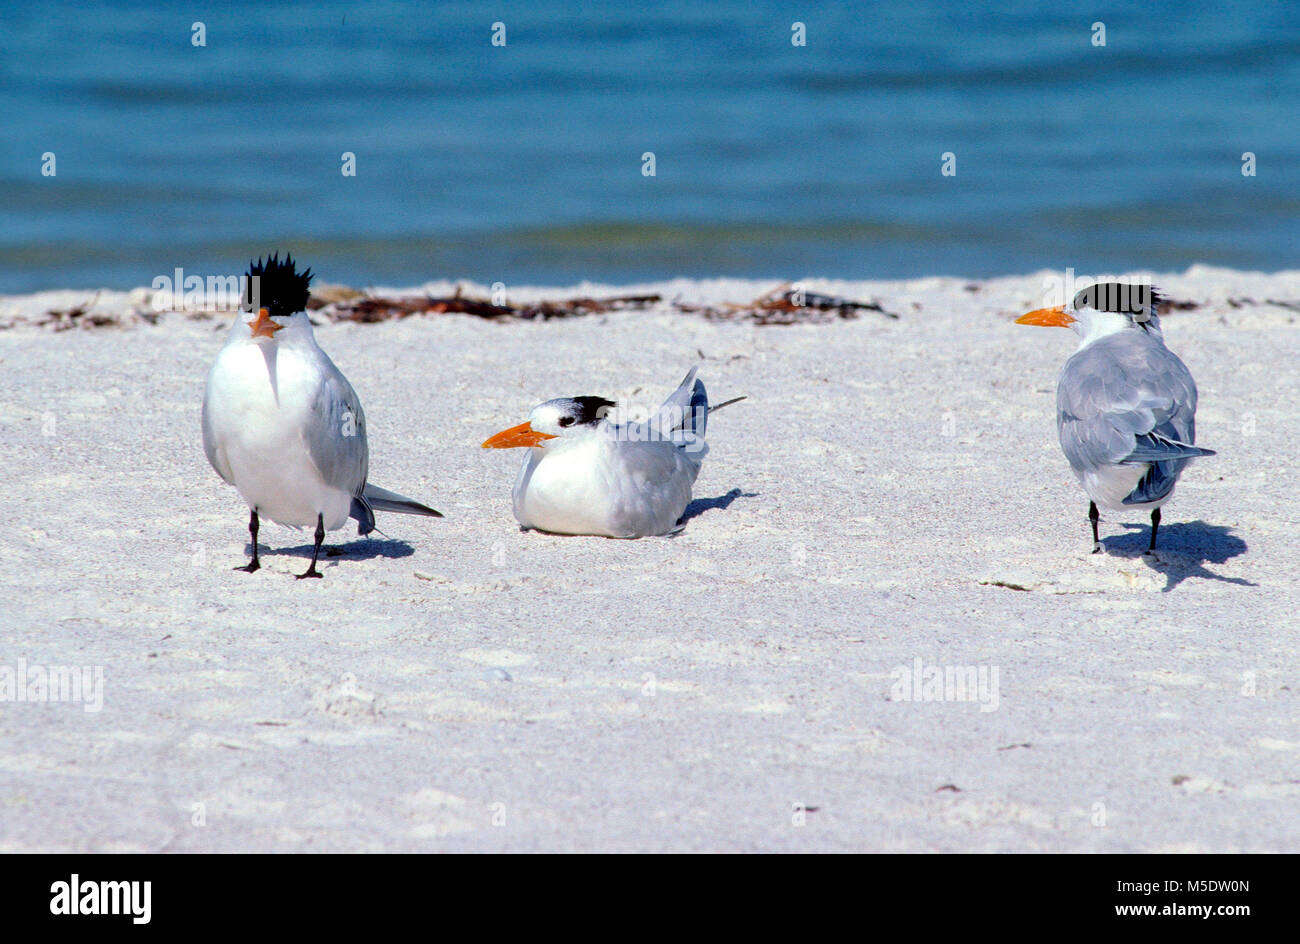 Royal Tern, Sterna maxima, Sternidae, Tern, sandy beach, bird, animal, Fort Myers beach, Florida, USA Stock Photo